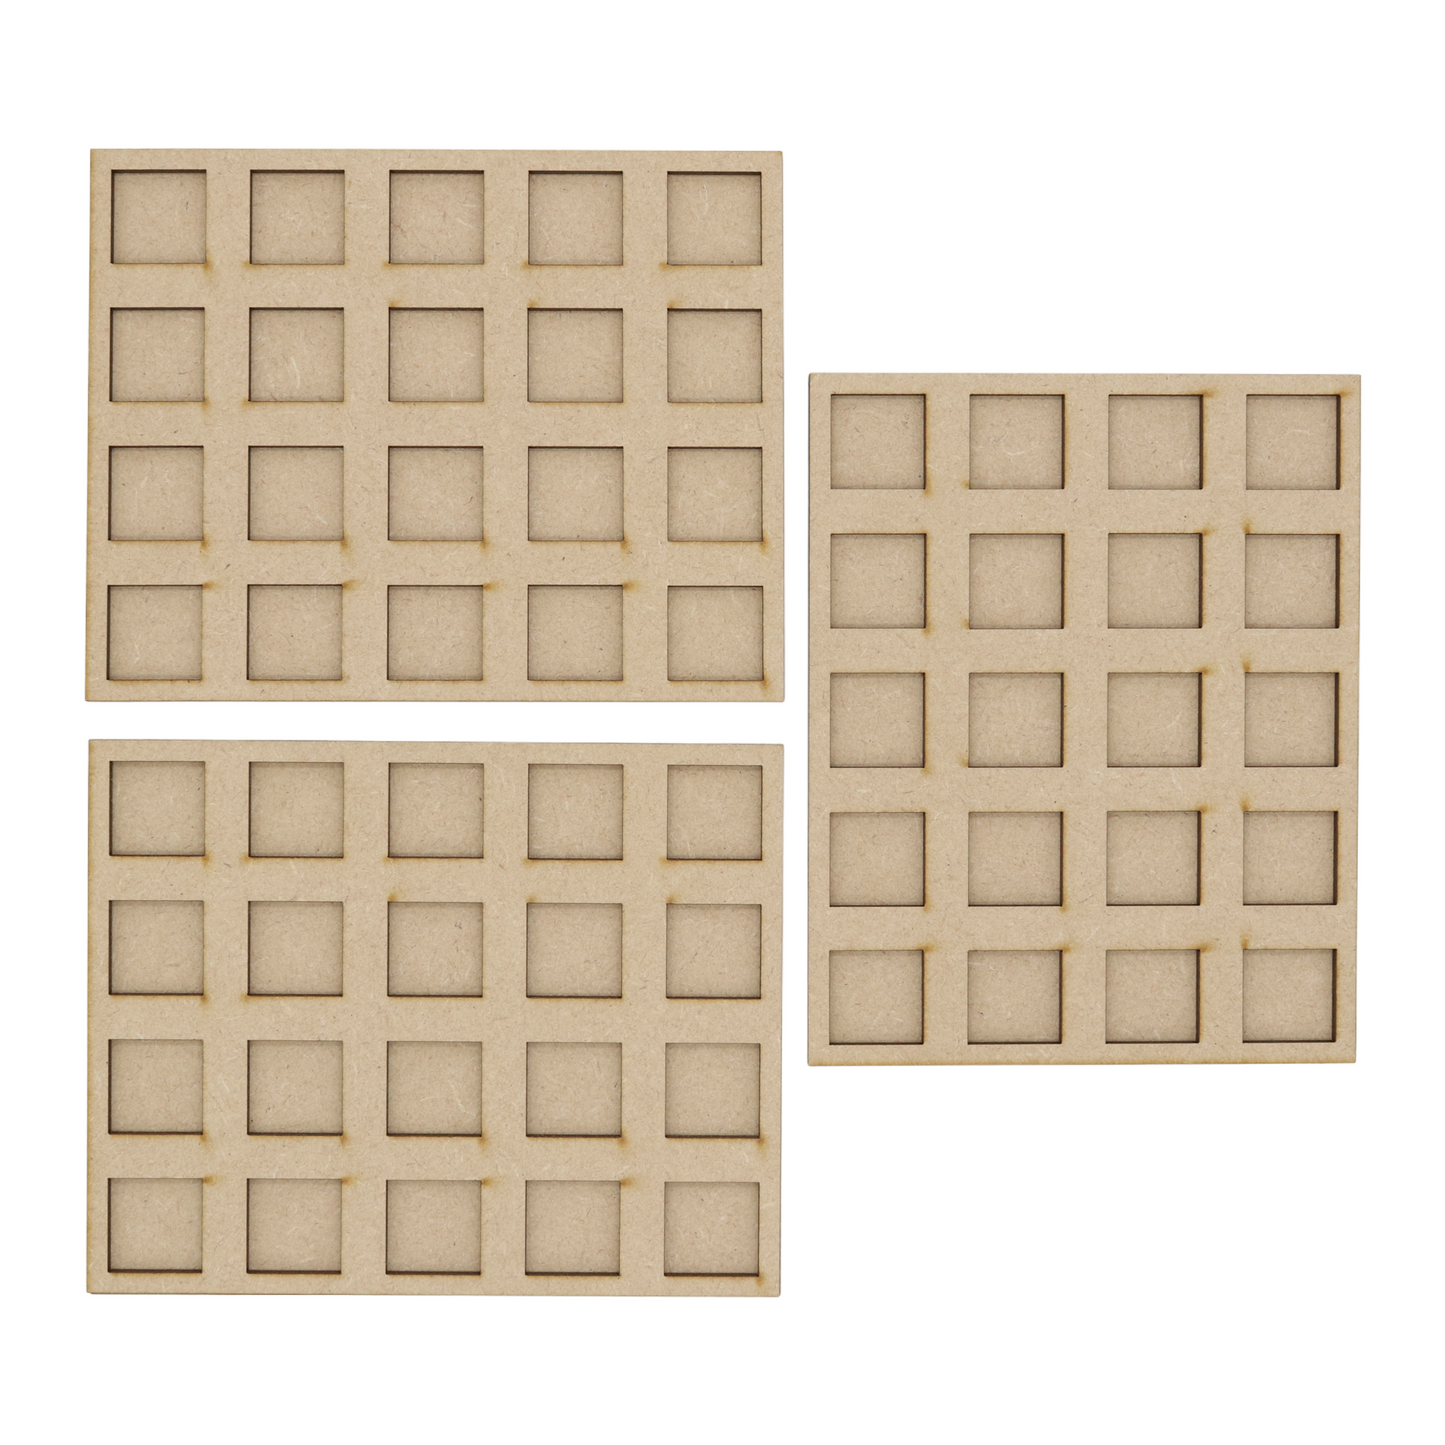 5x4 - 20mm Square Movement Tray